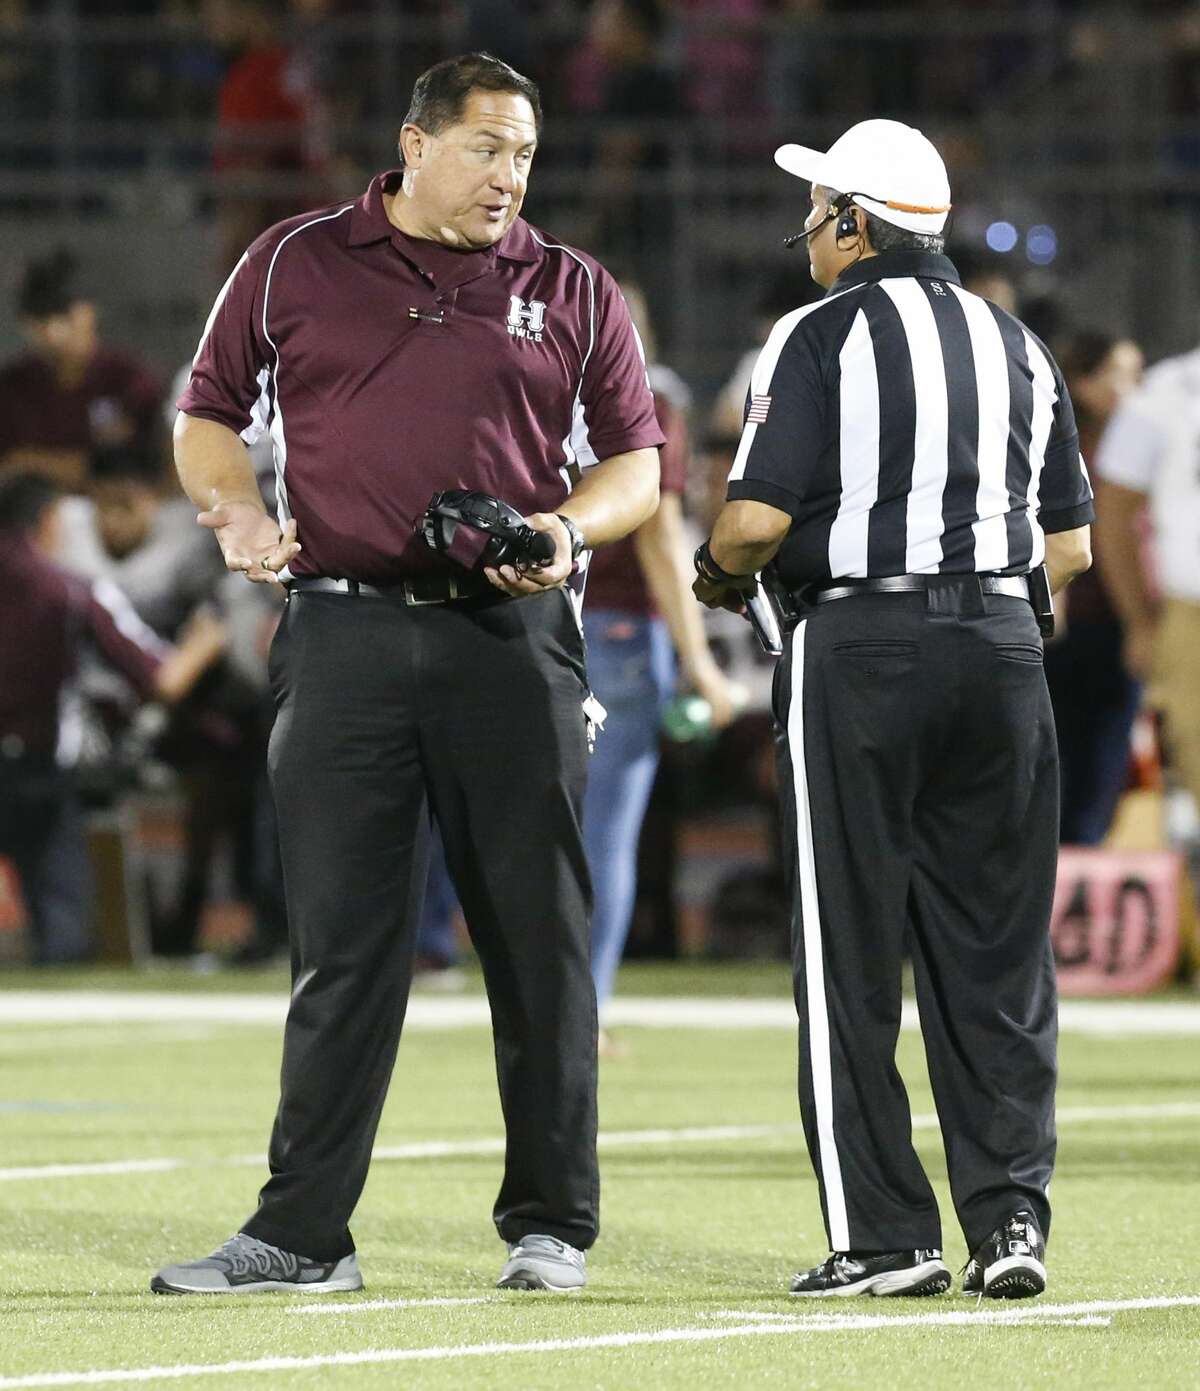 Highlands' coach Juan Morales talks with a game official during the game against Brackenridge at Alamo Stadium on Friday, Nov. 4, 2016. (Kin Man Hui/San Antonio Express-News)